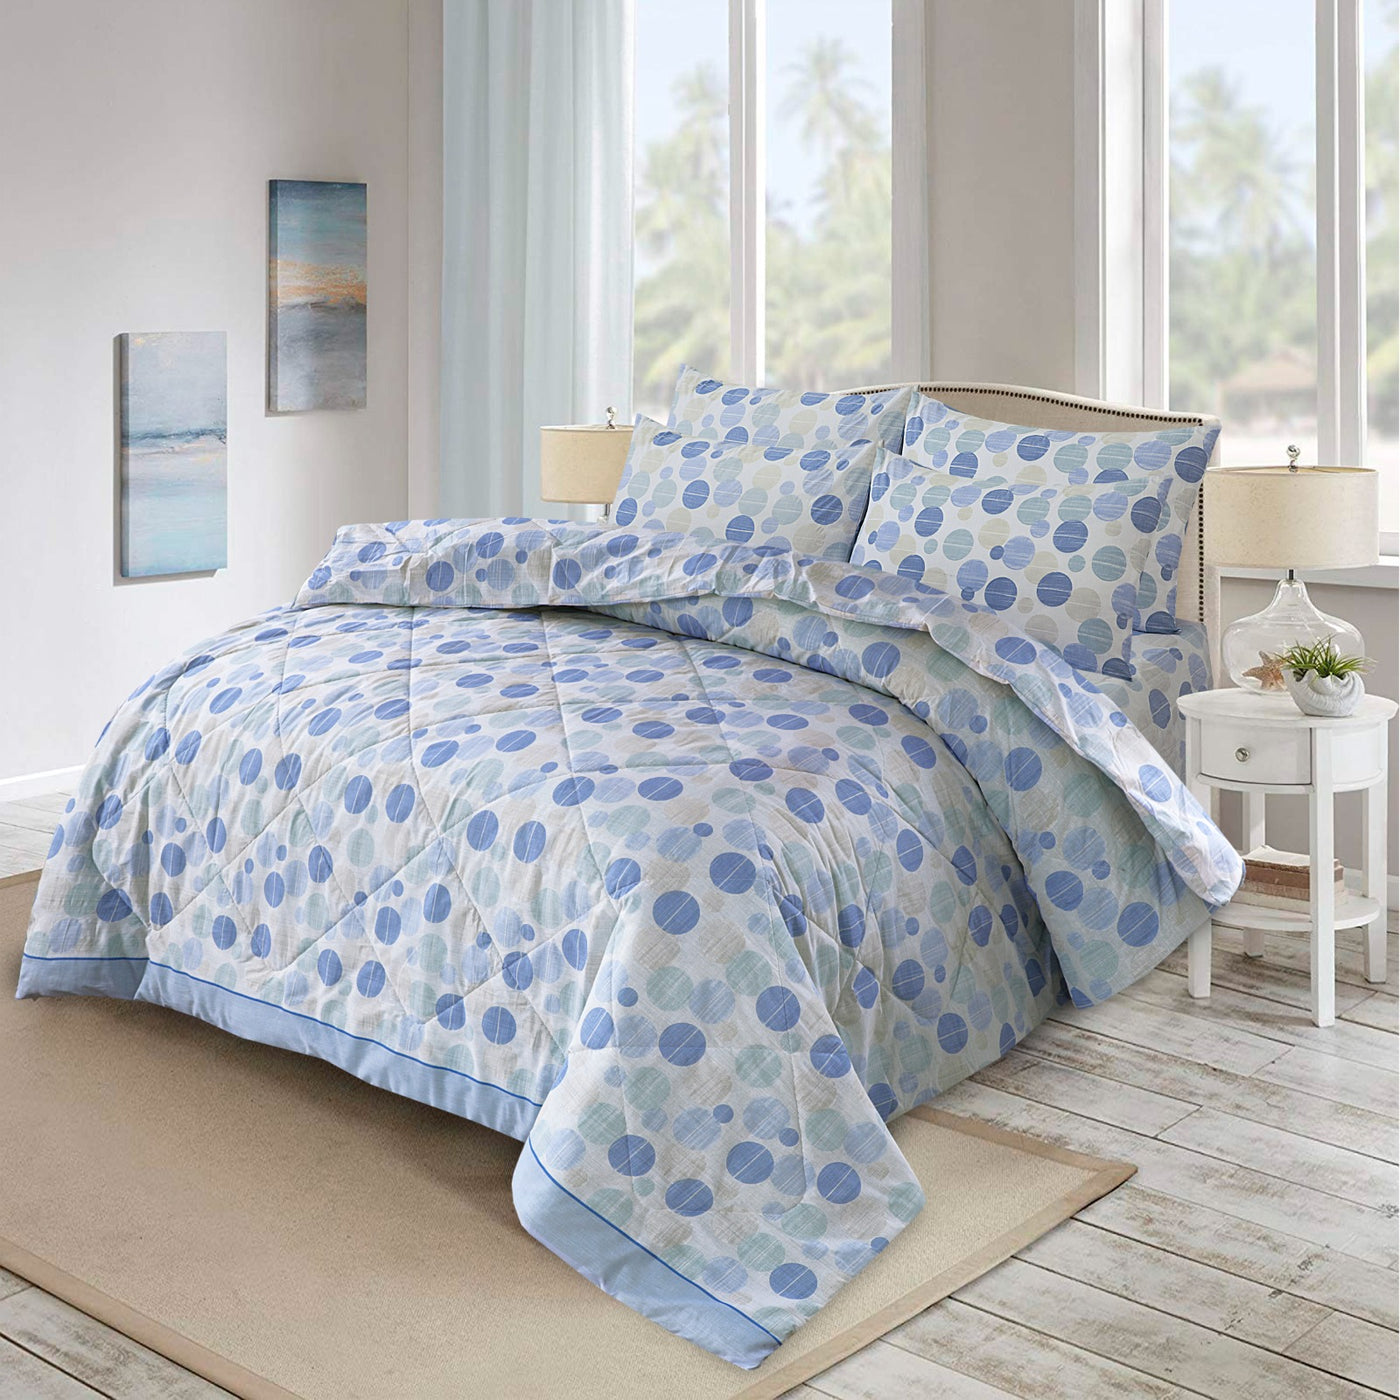 Blue Circles-Summer Comforter Set (Light Filling)